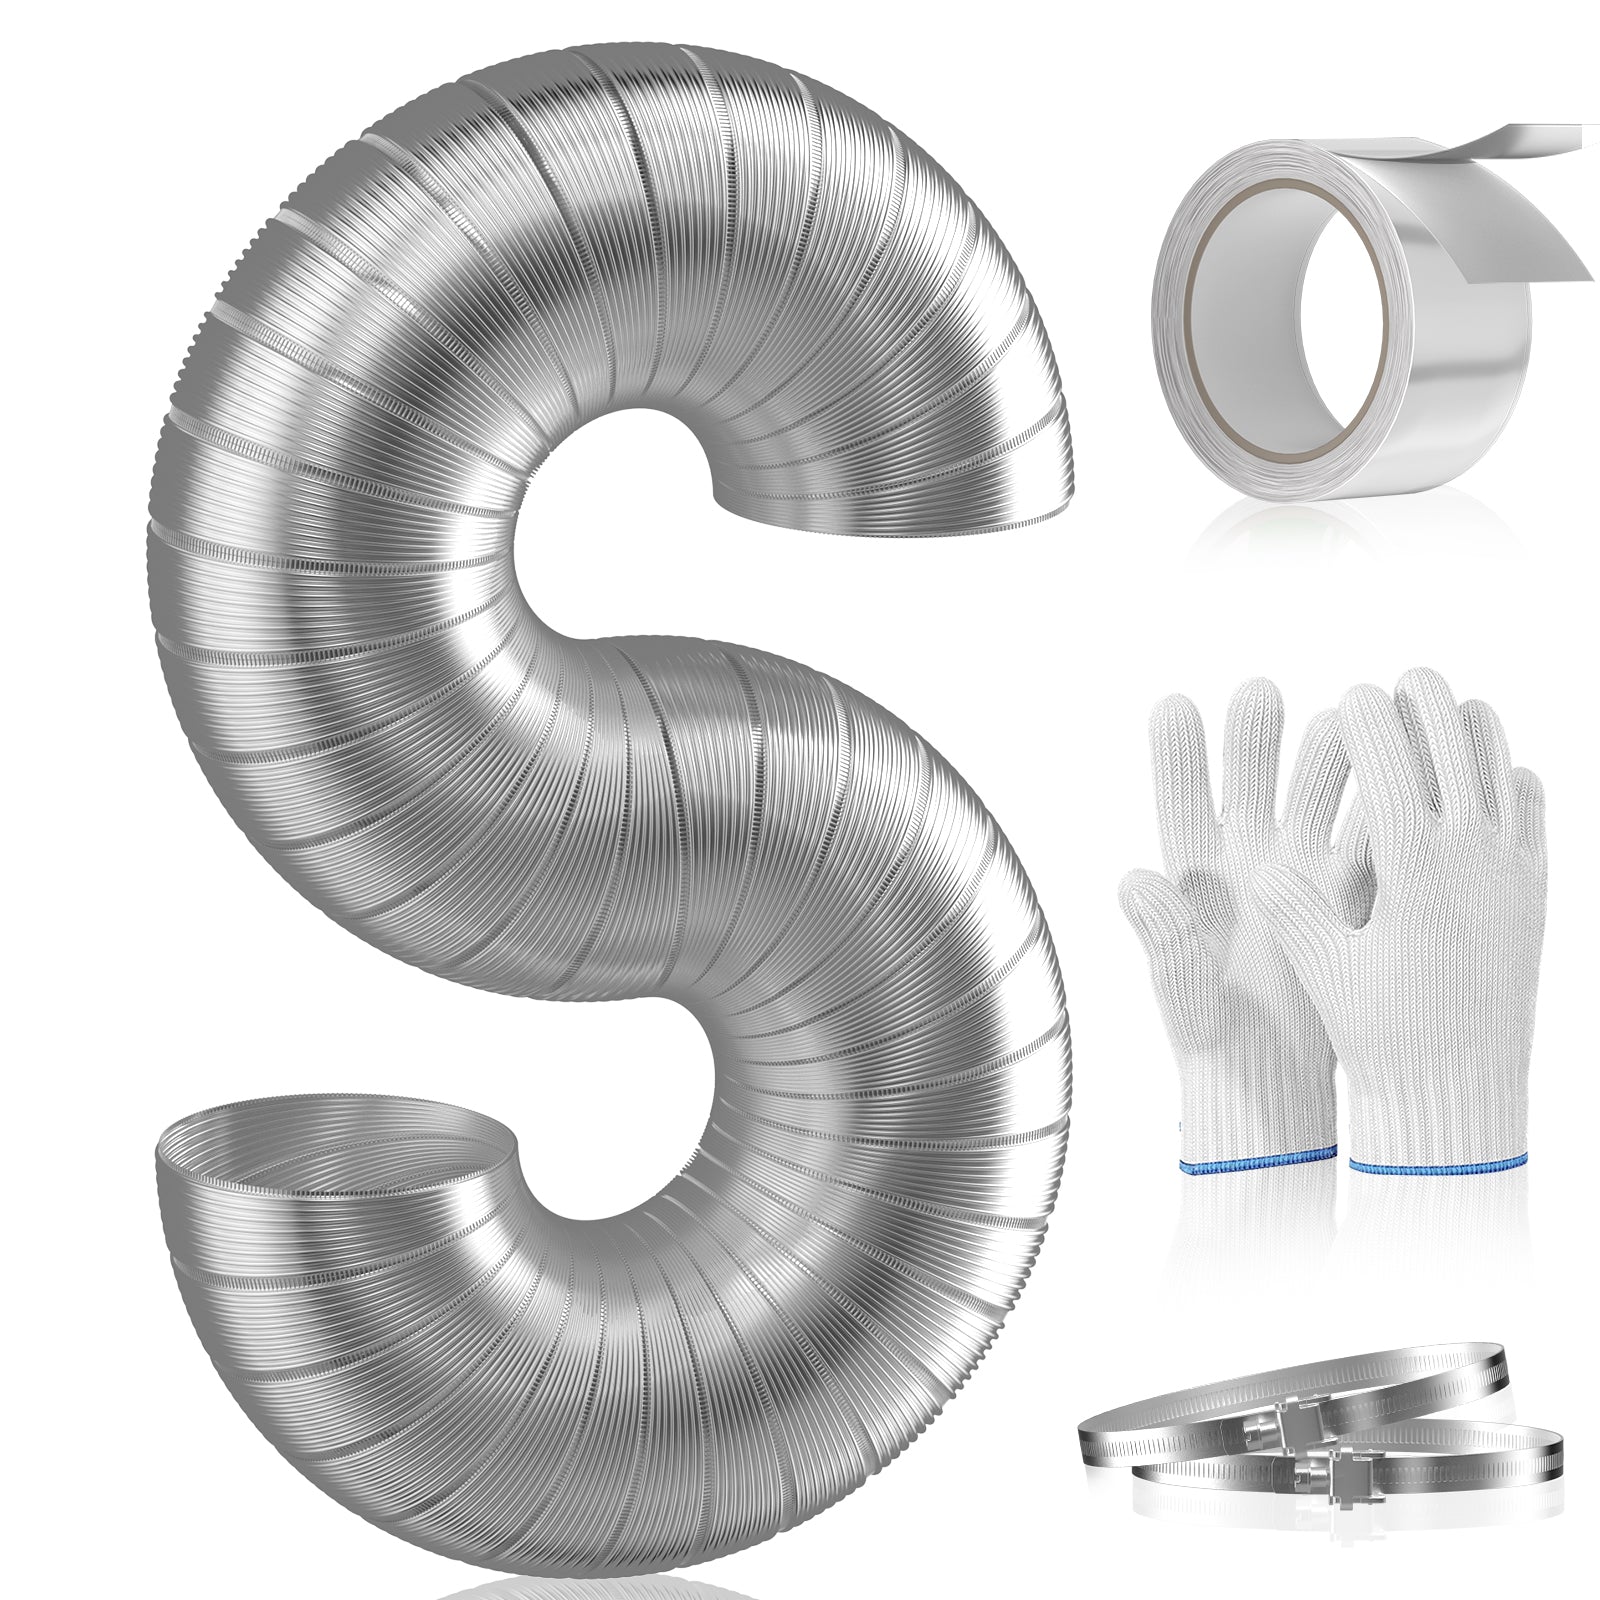 Semi Rigid Aluminum Dryer Vent Hose, 5 & 8 Feet Flexible with 2 Clamps, Pair of Gloves, and Aluminum Foil Tape